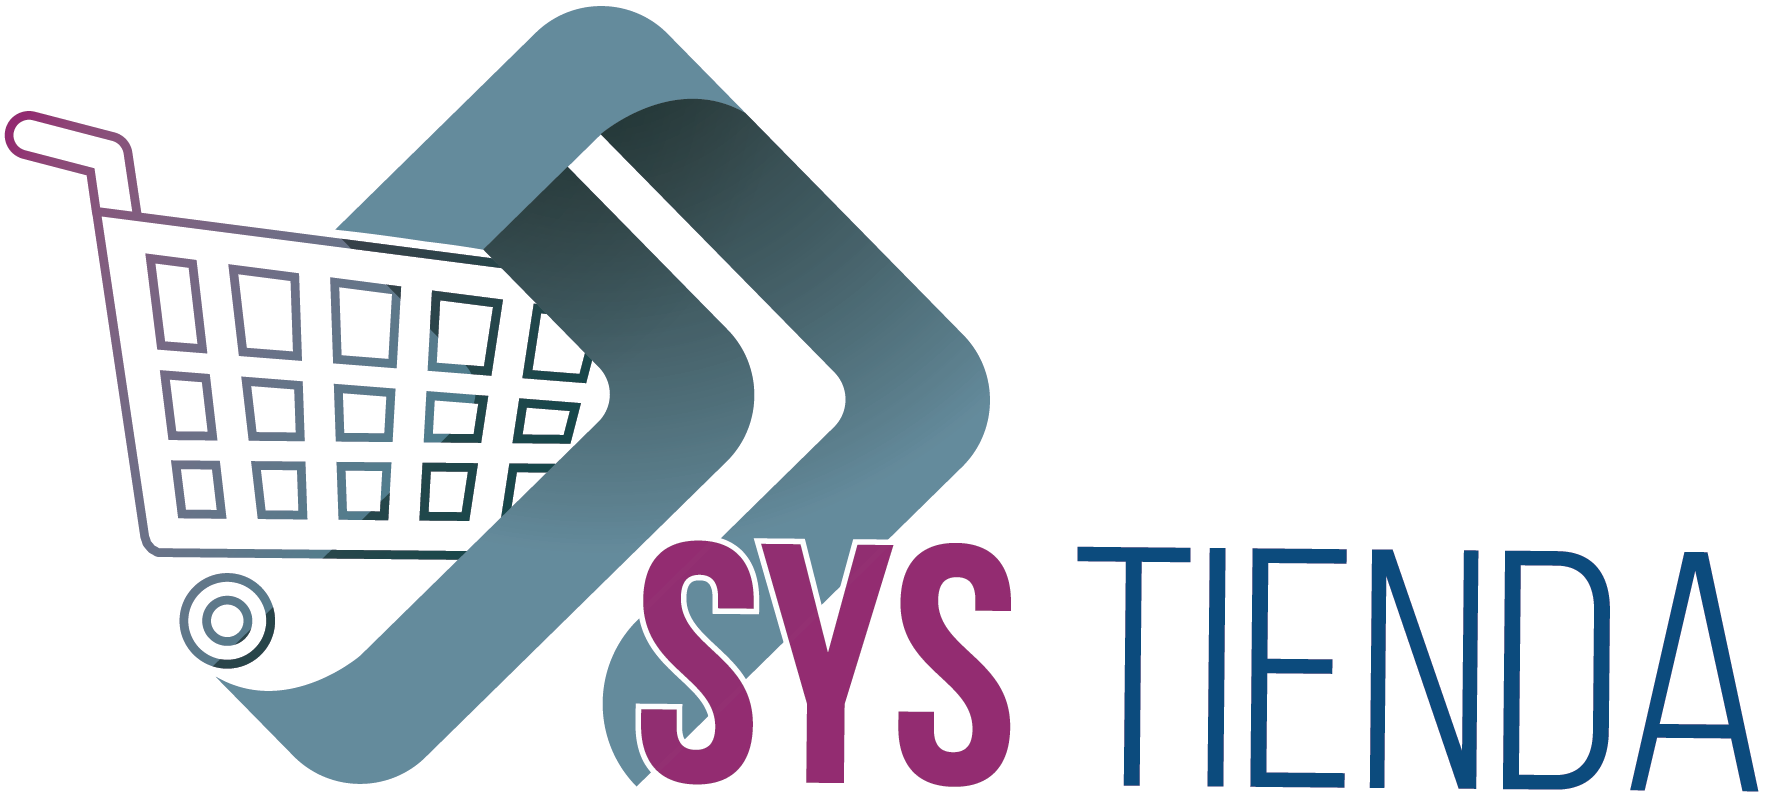 Systienda Logo